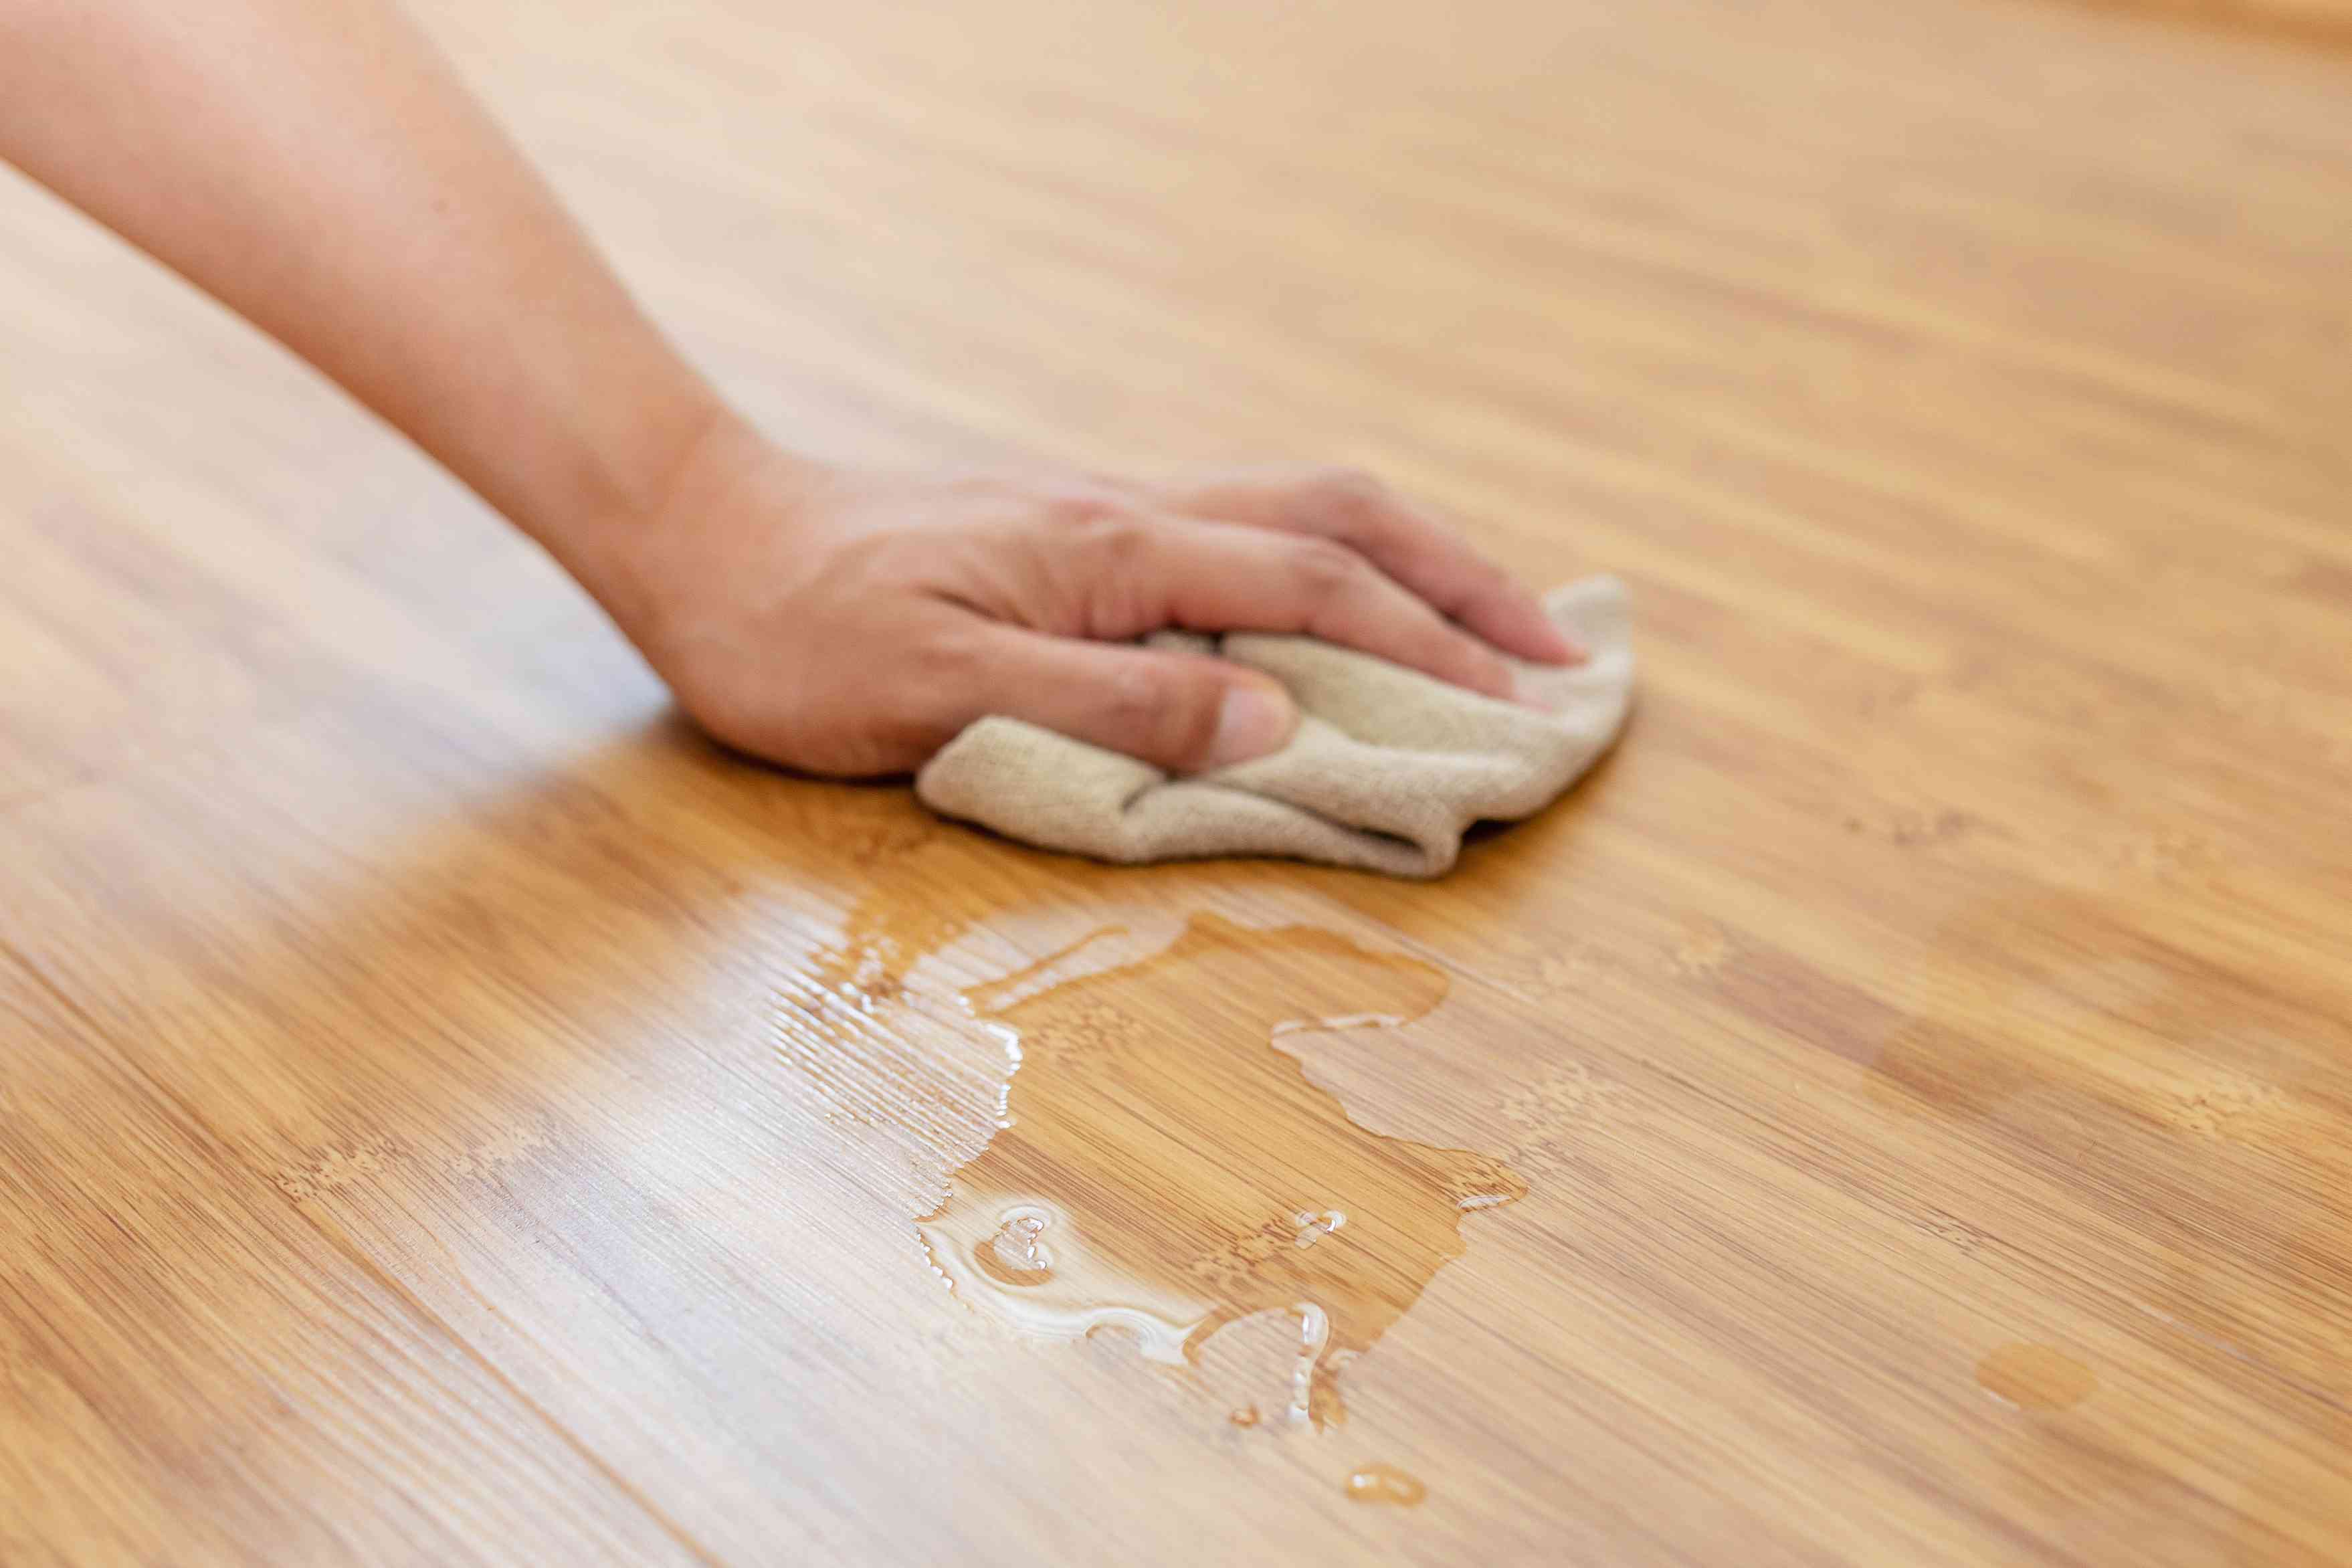 How To Soak Up Water From Floor